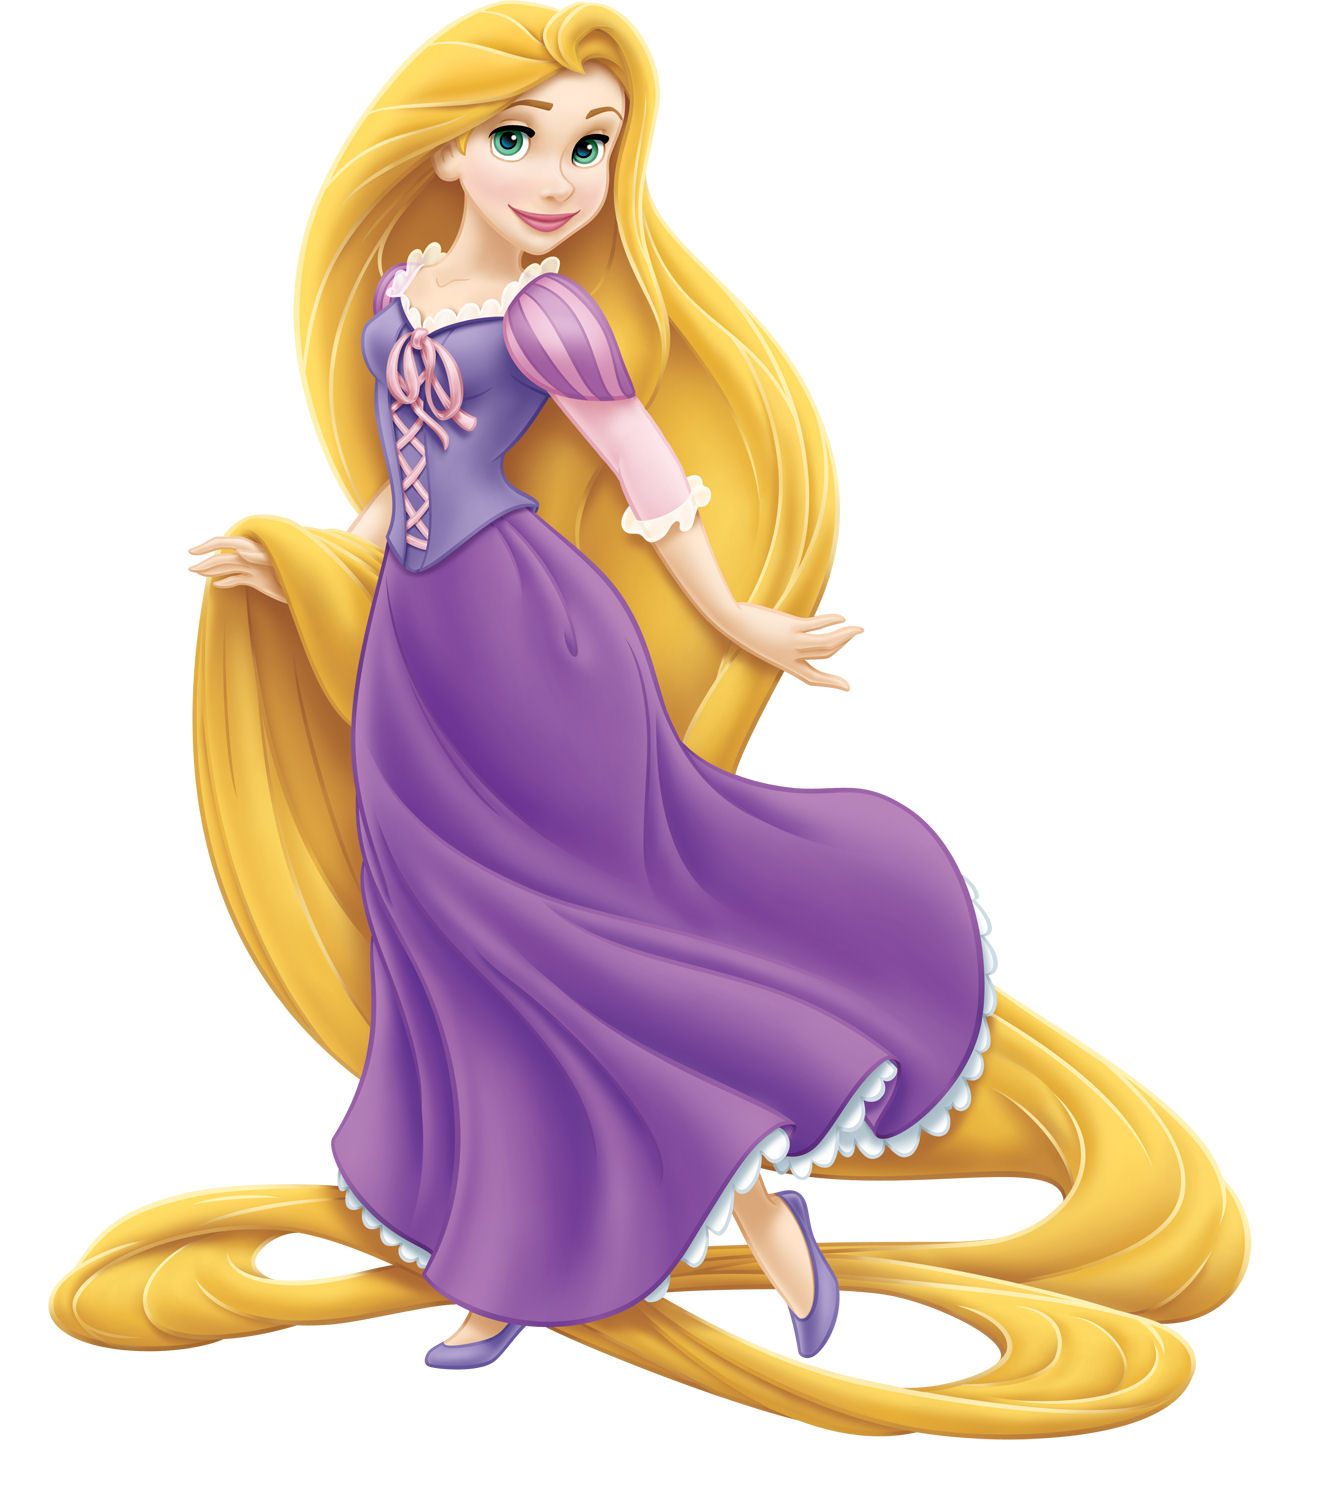 Another Rapunzel Pose - Disney Princess Photo (33150119) - Fanpop